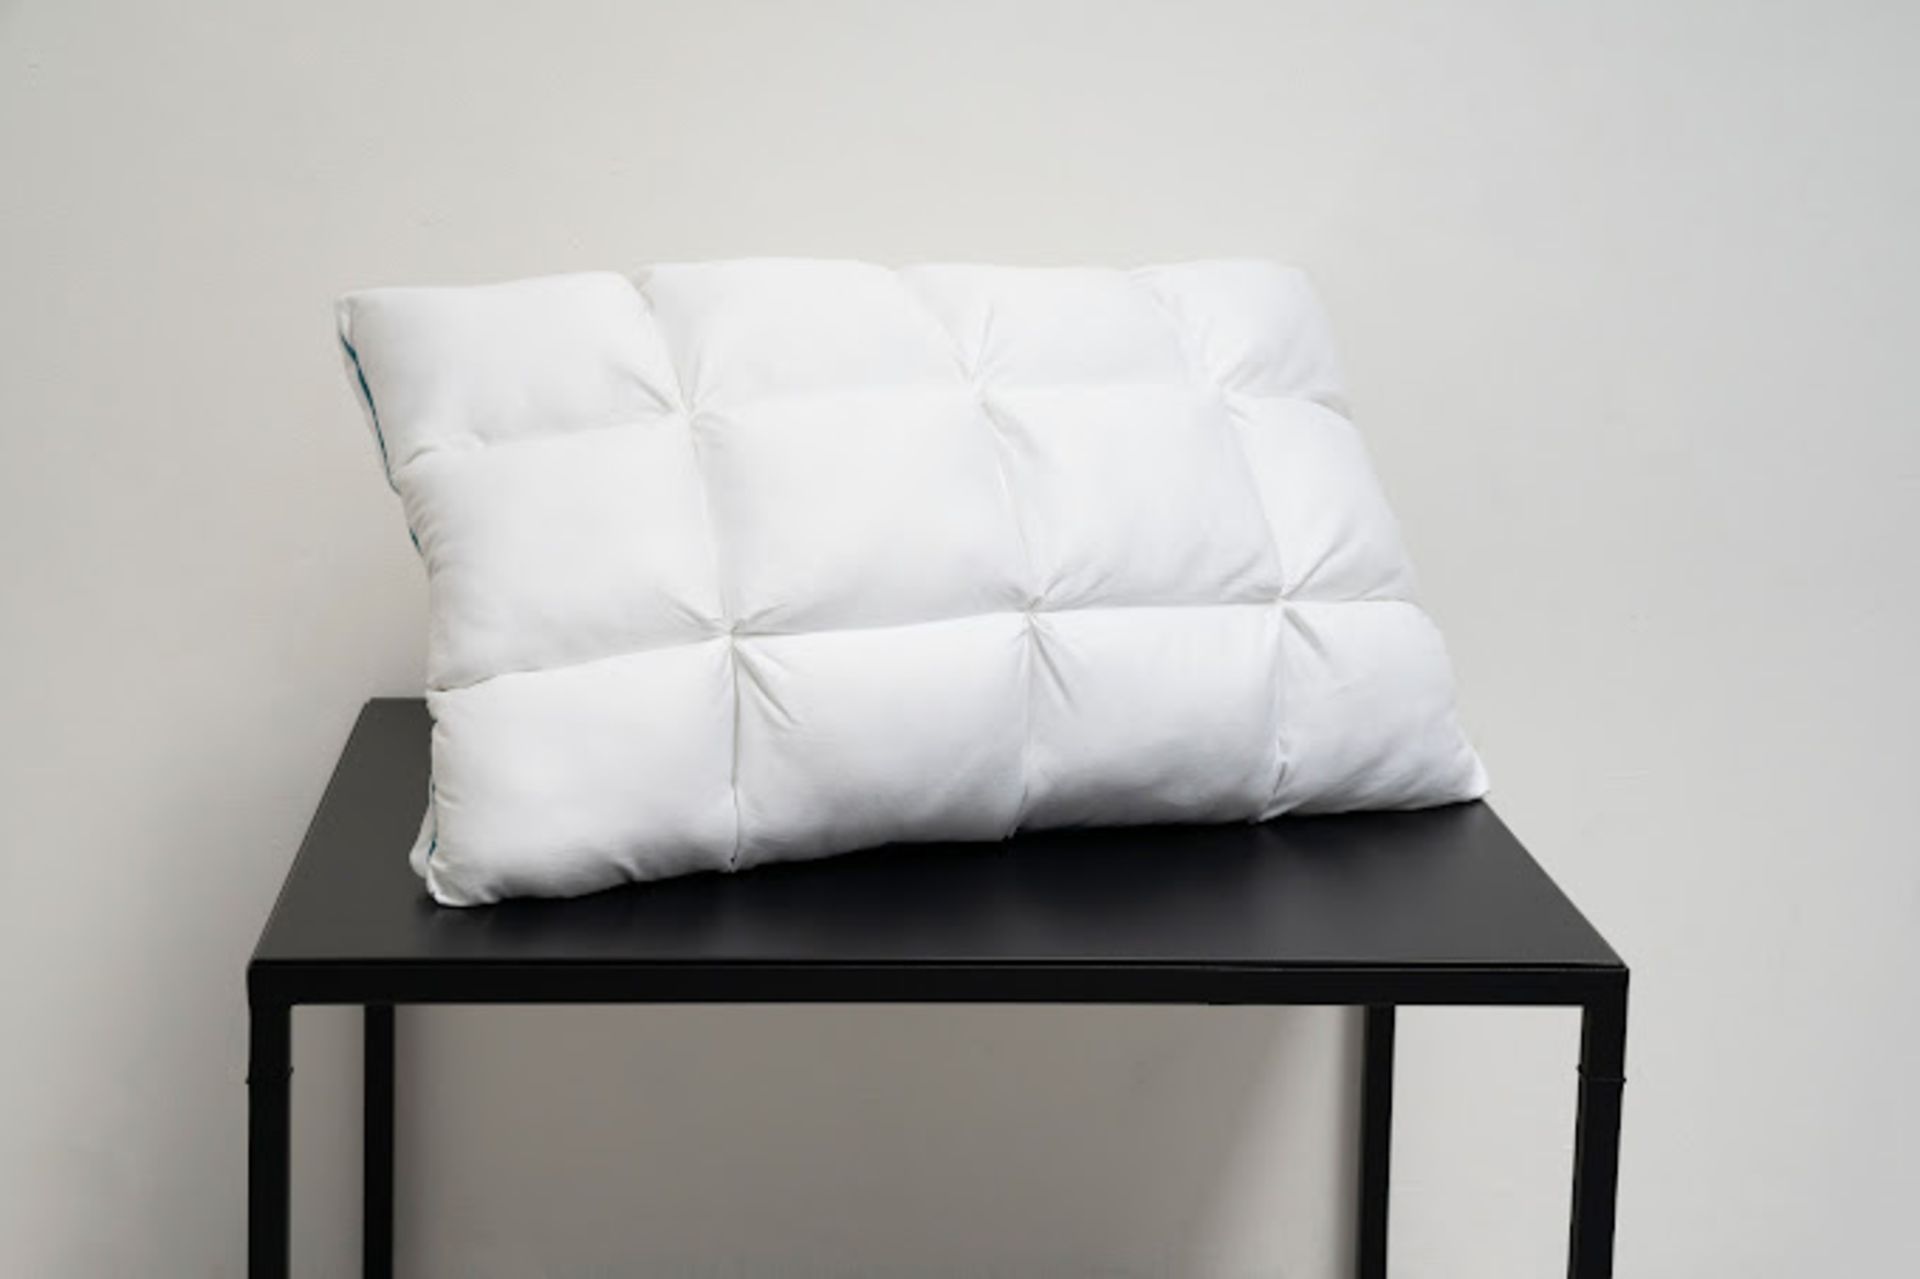 2 x ComfaSleep PL0001 Pillows - Image 6 of 18